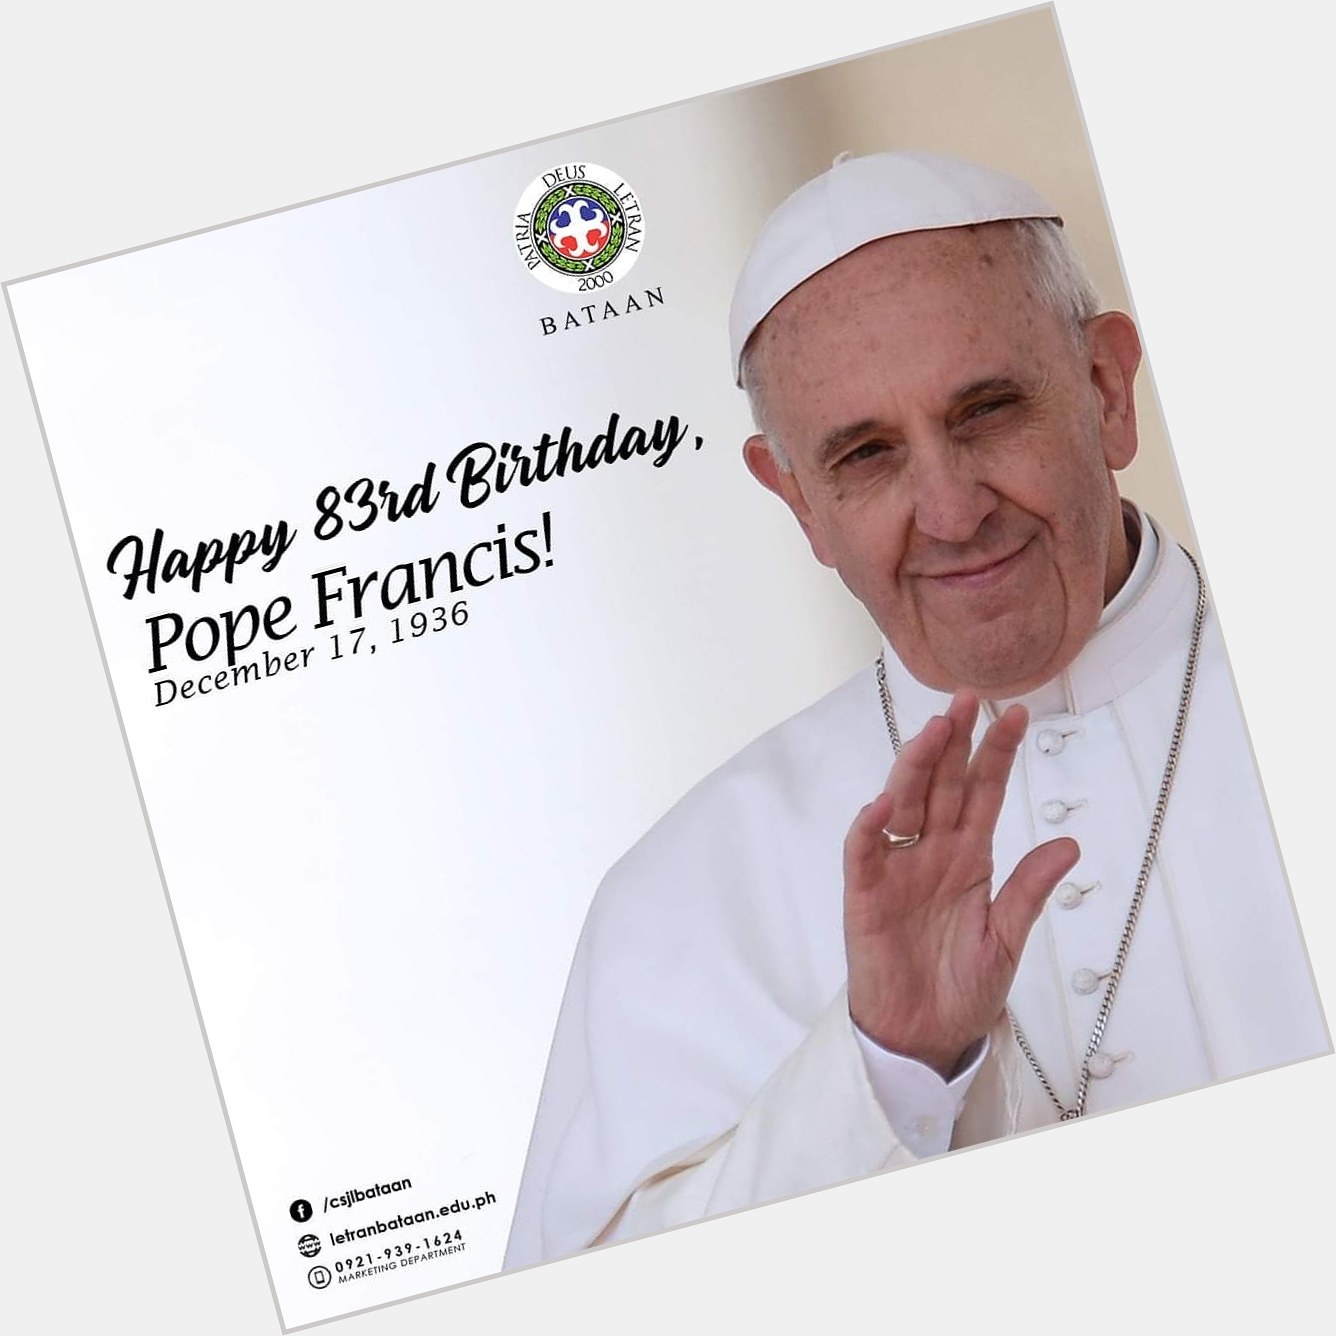 Happy 83rd Birthday, Pope Francis! 